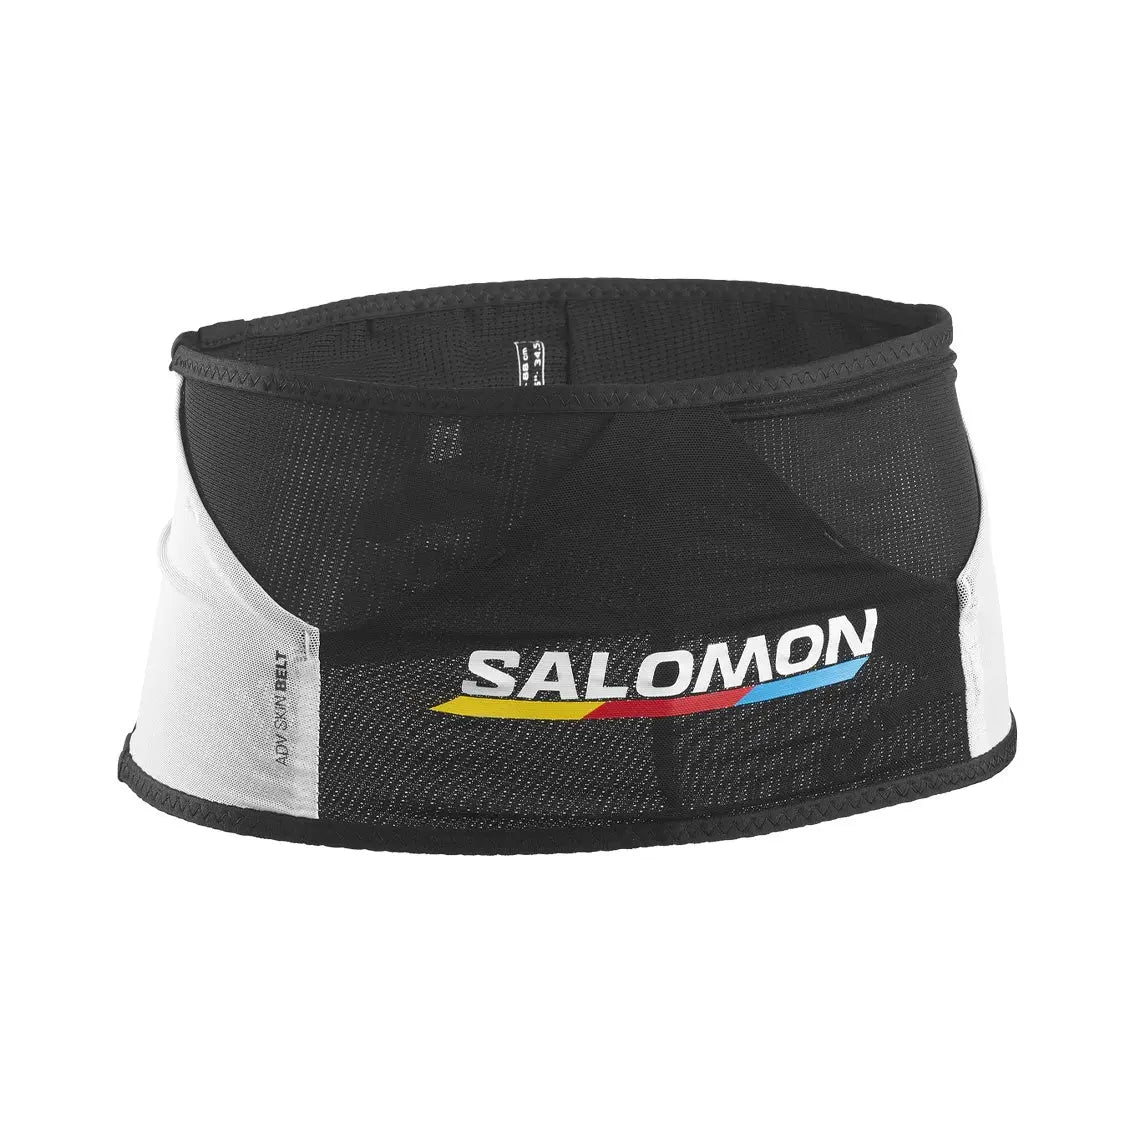 Unisex Salomon Advanced Skin Belt